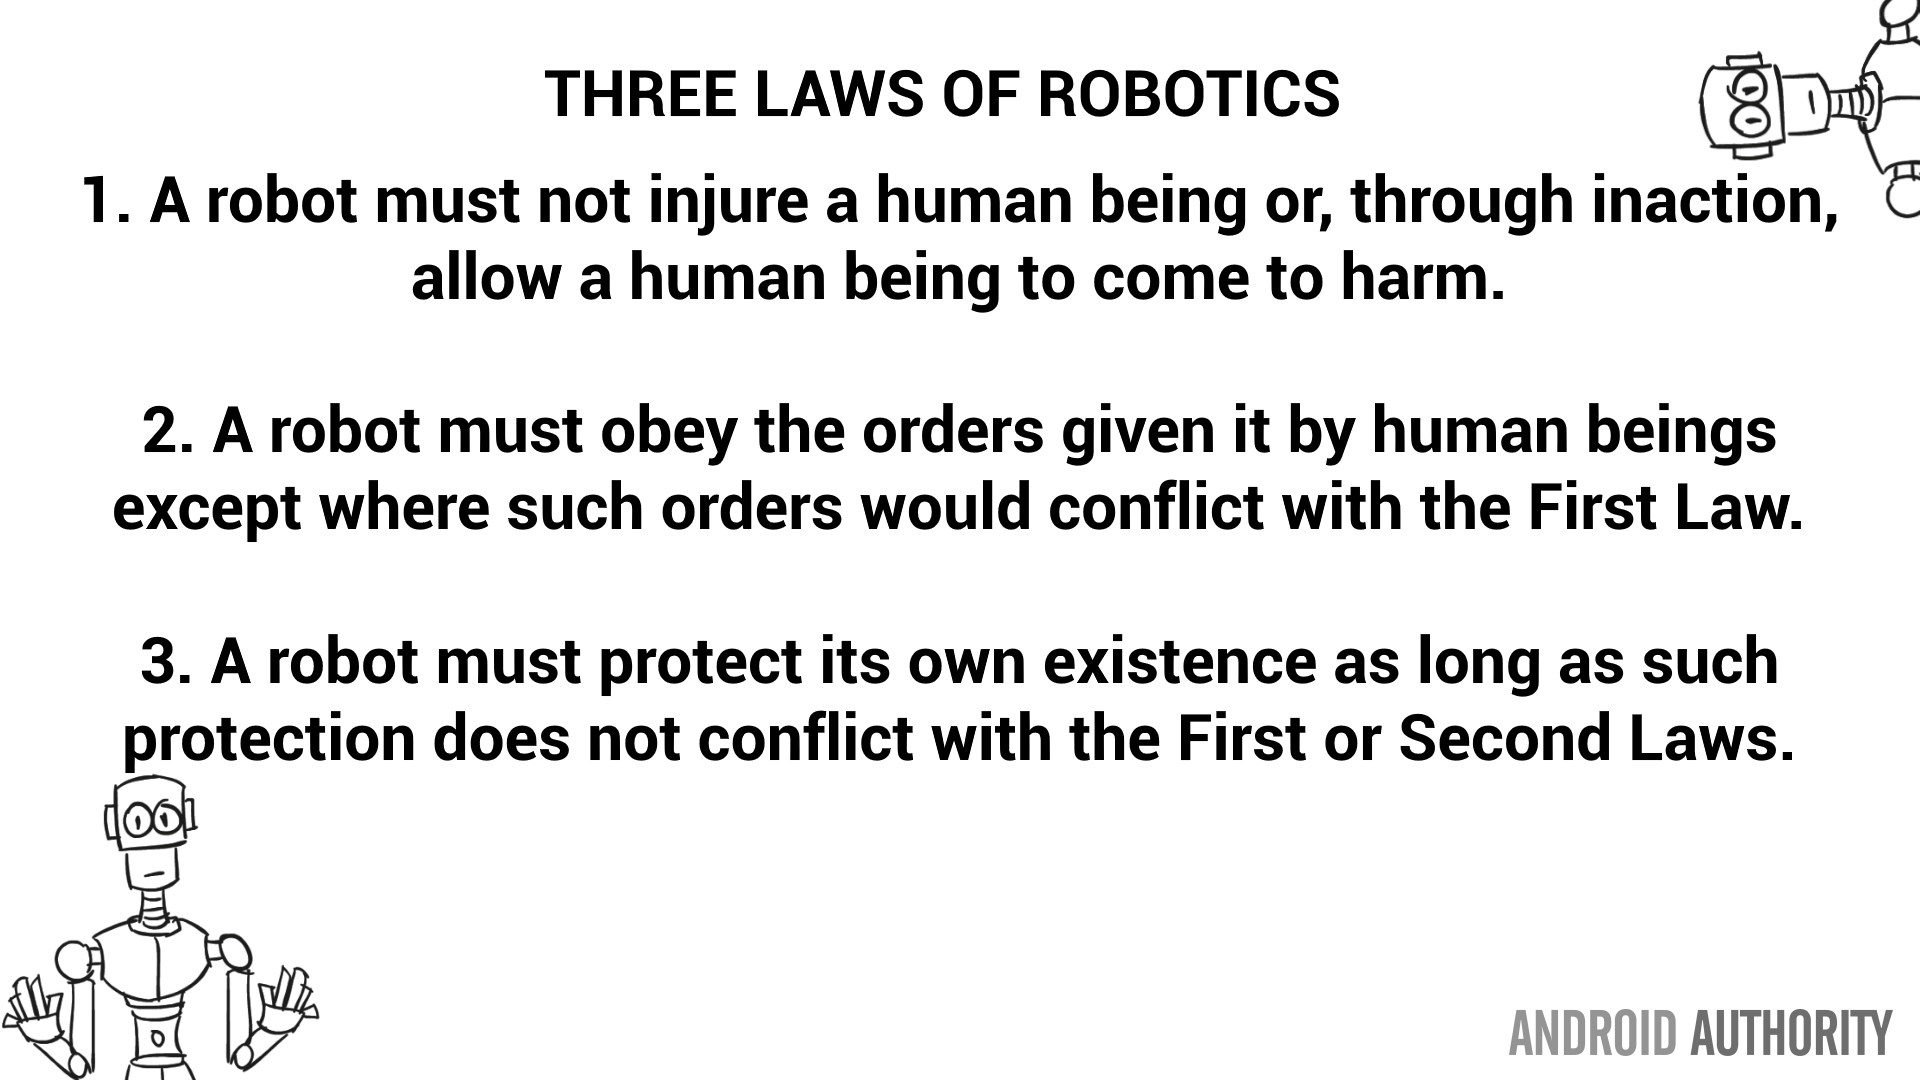 three-laws-of-robotics-the-laws